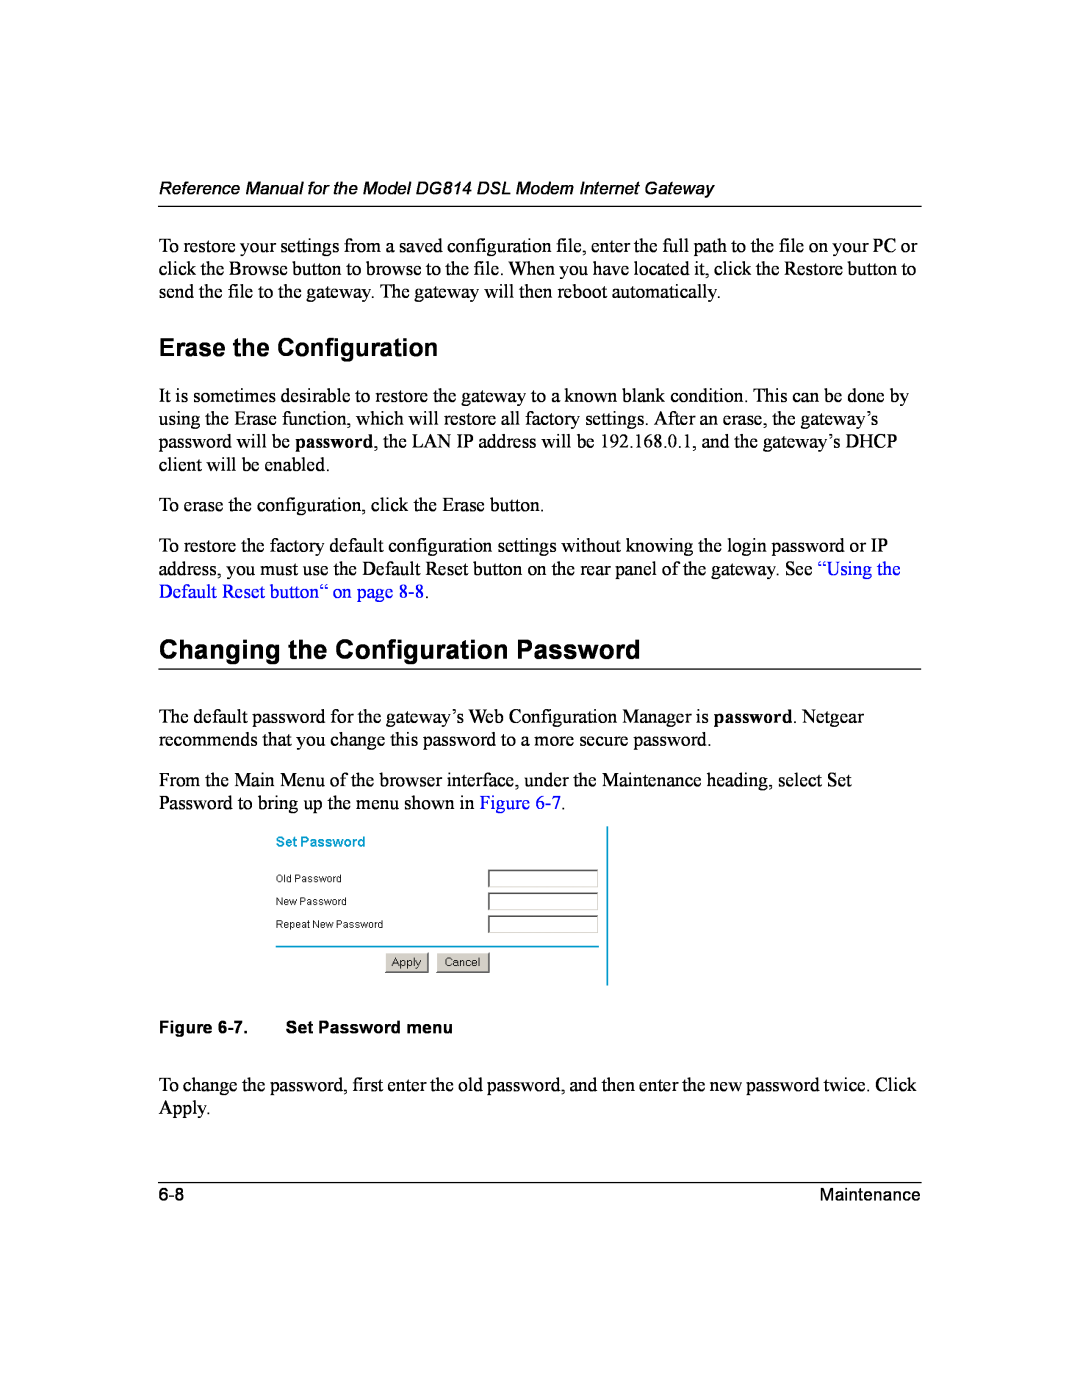 NETGEAR DG814 DSL manual Changing the Configuration Password, Erase the Configuration 